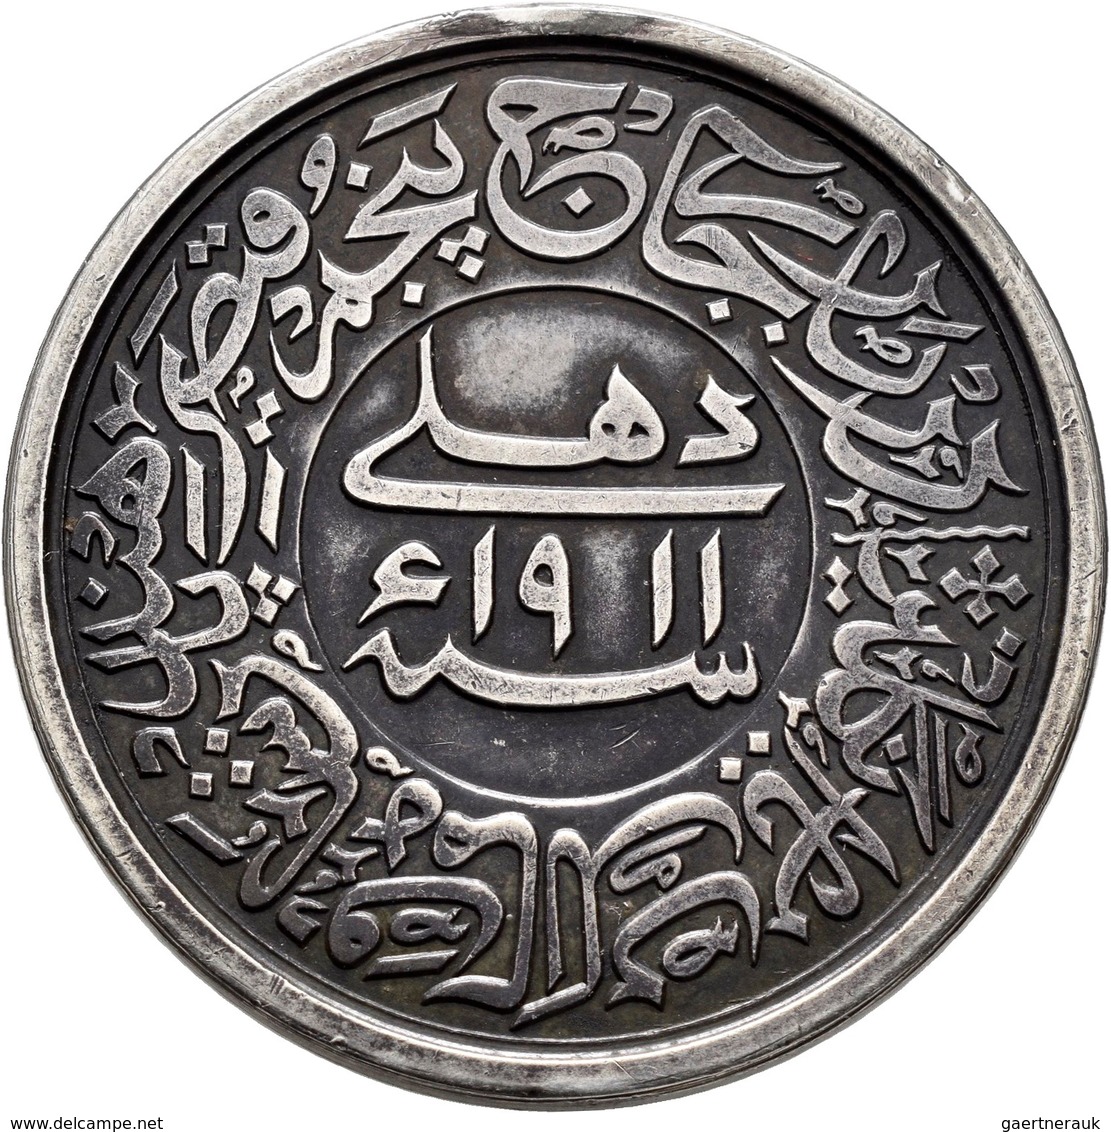 Indien: Britisch Indien/East India Company, Georg V. 1910-1936: Silbermedaille 1911 ("Delhi Durbar M - India